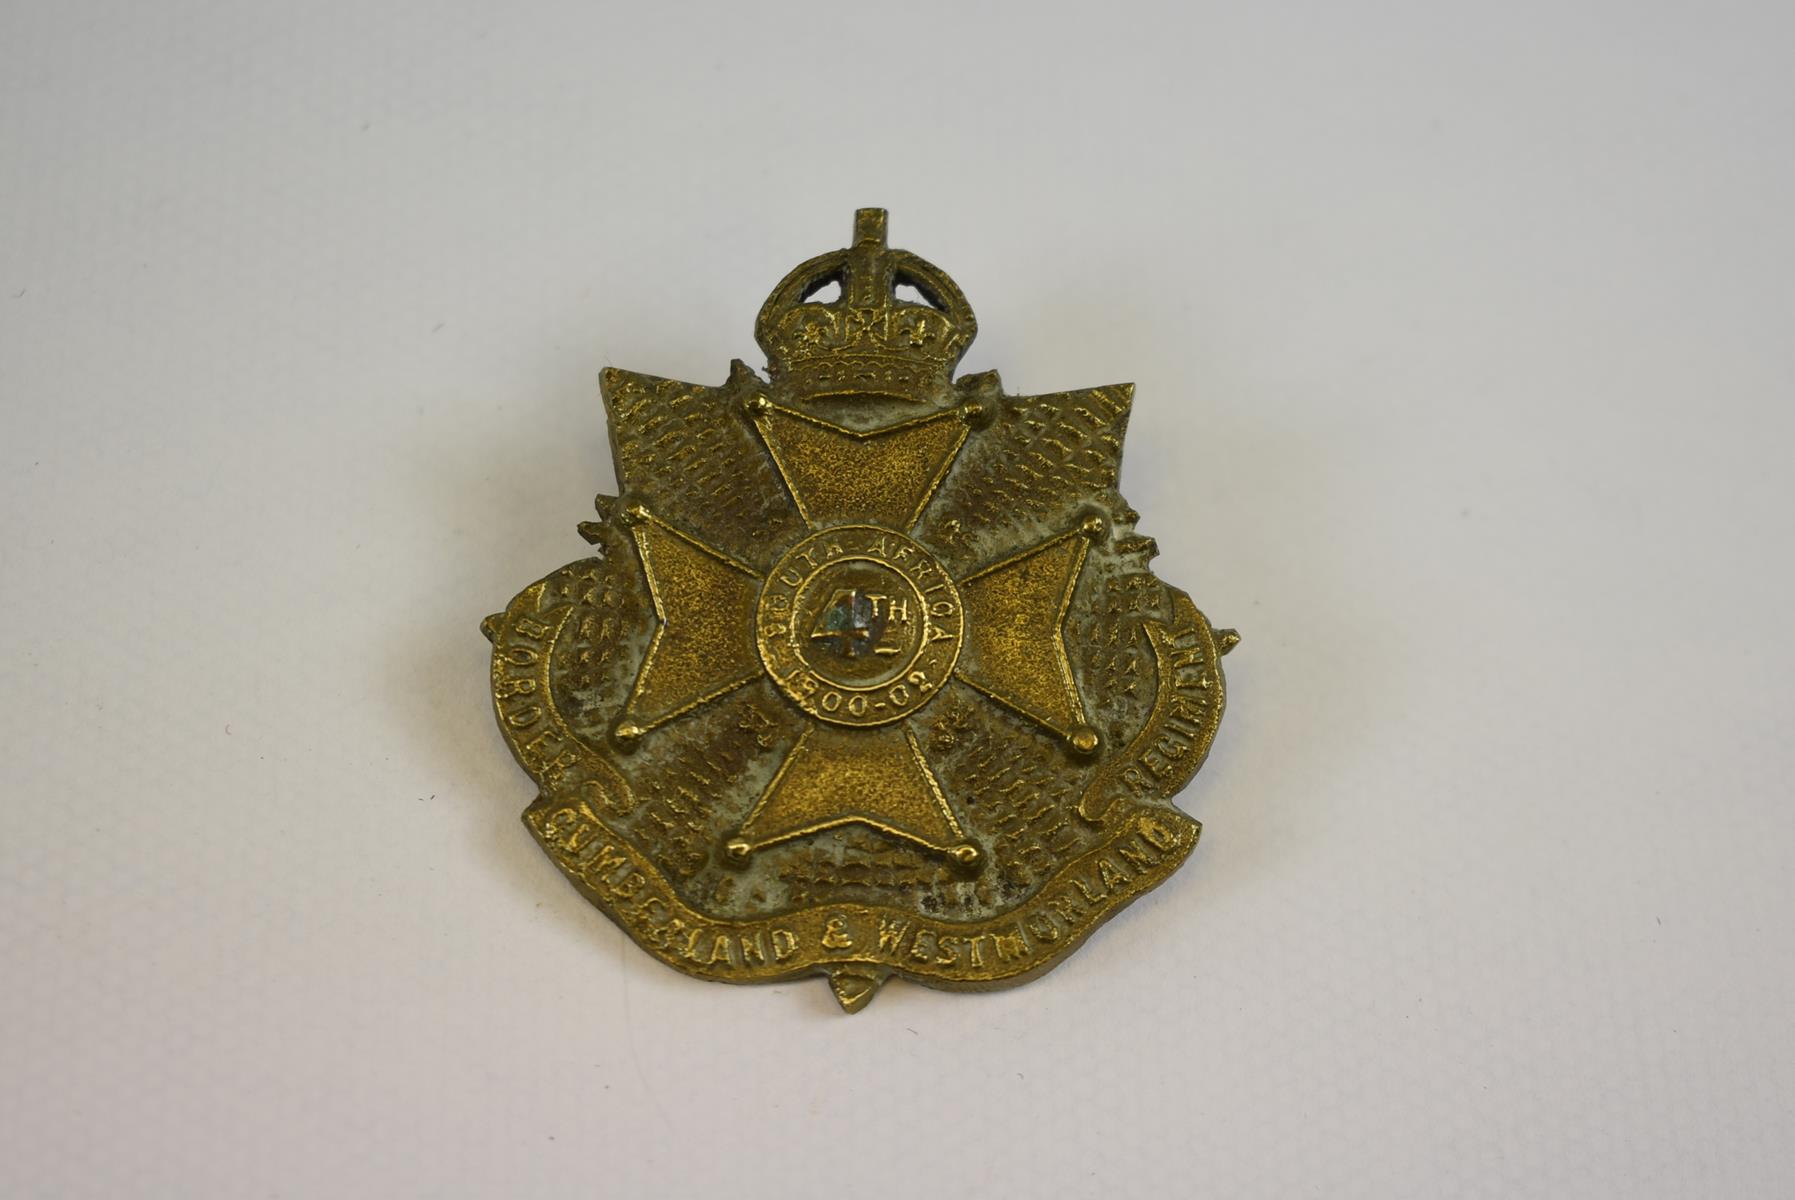 4TH BATTALION THE BORDER REGIMENT, OFFICER'S SERVICE DRESS BRONZE CAP BADHE 1905-1920. A very rare